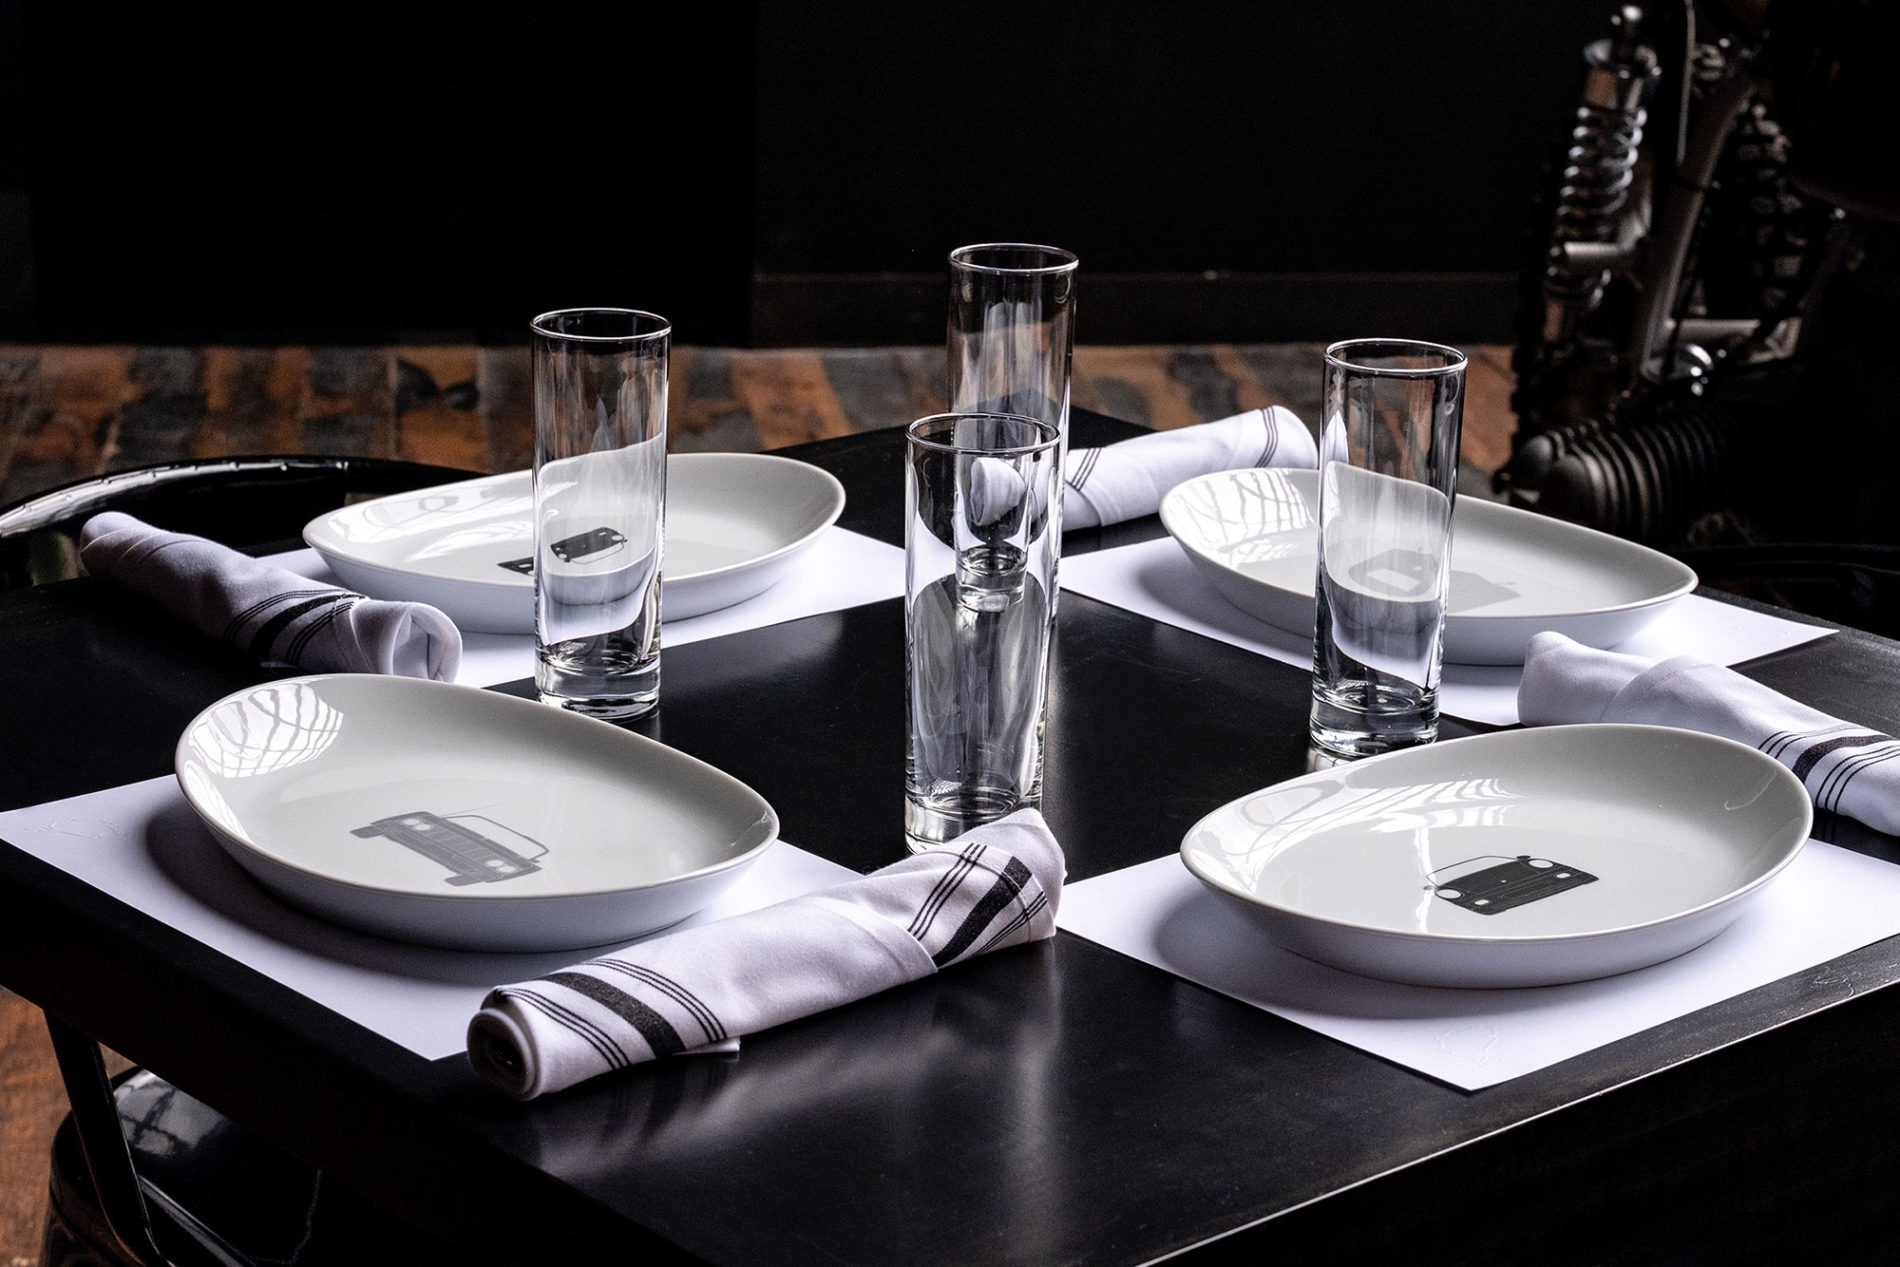 A table set with custom plates